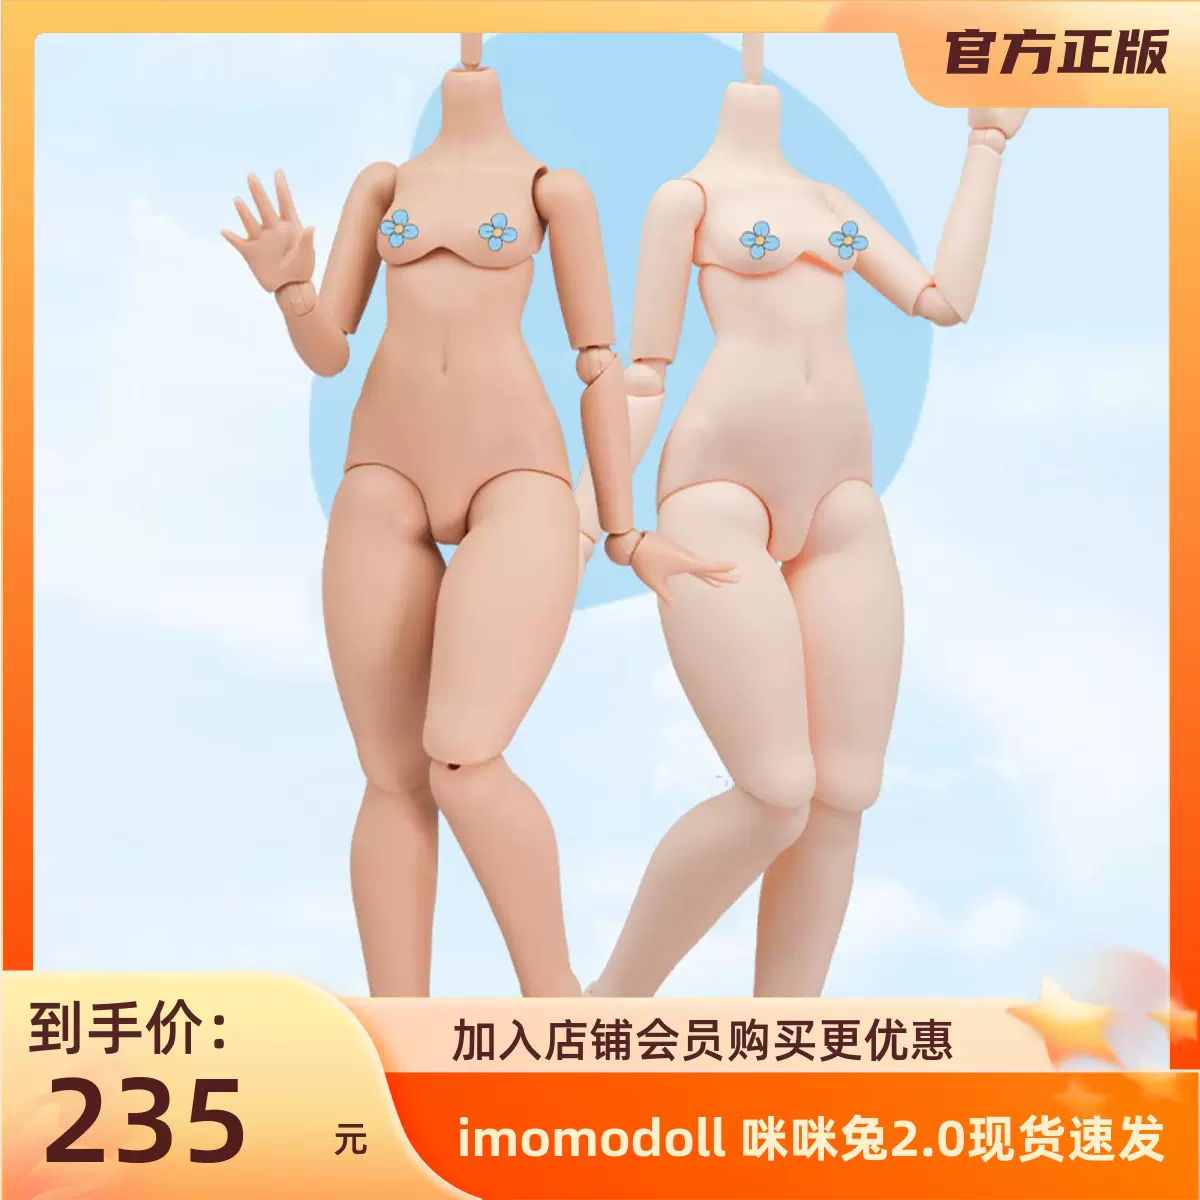 imomodoll 1/4 小胸 咪咪兔2.0 MJD BJD - 趣味/おもちゃ